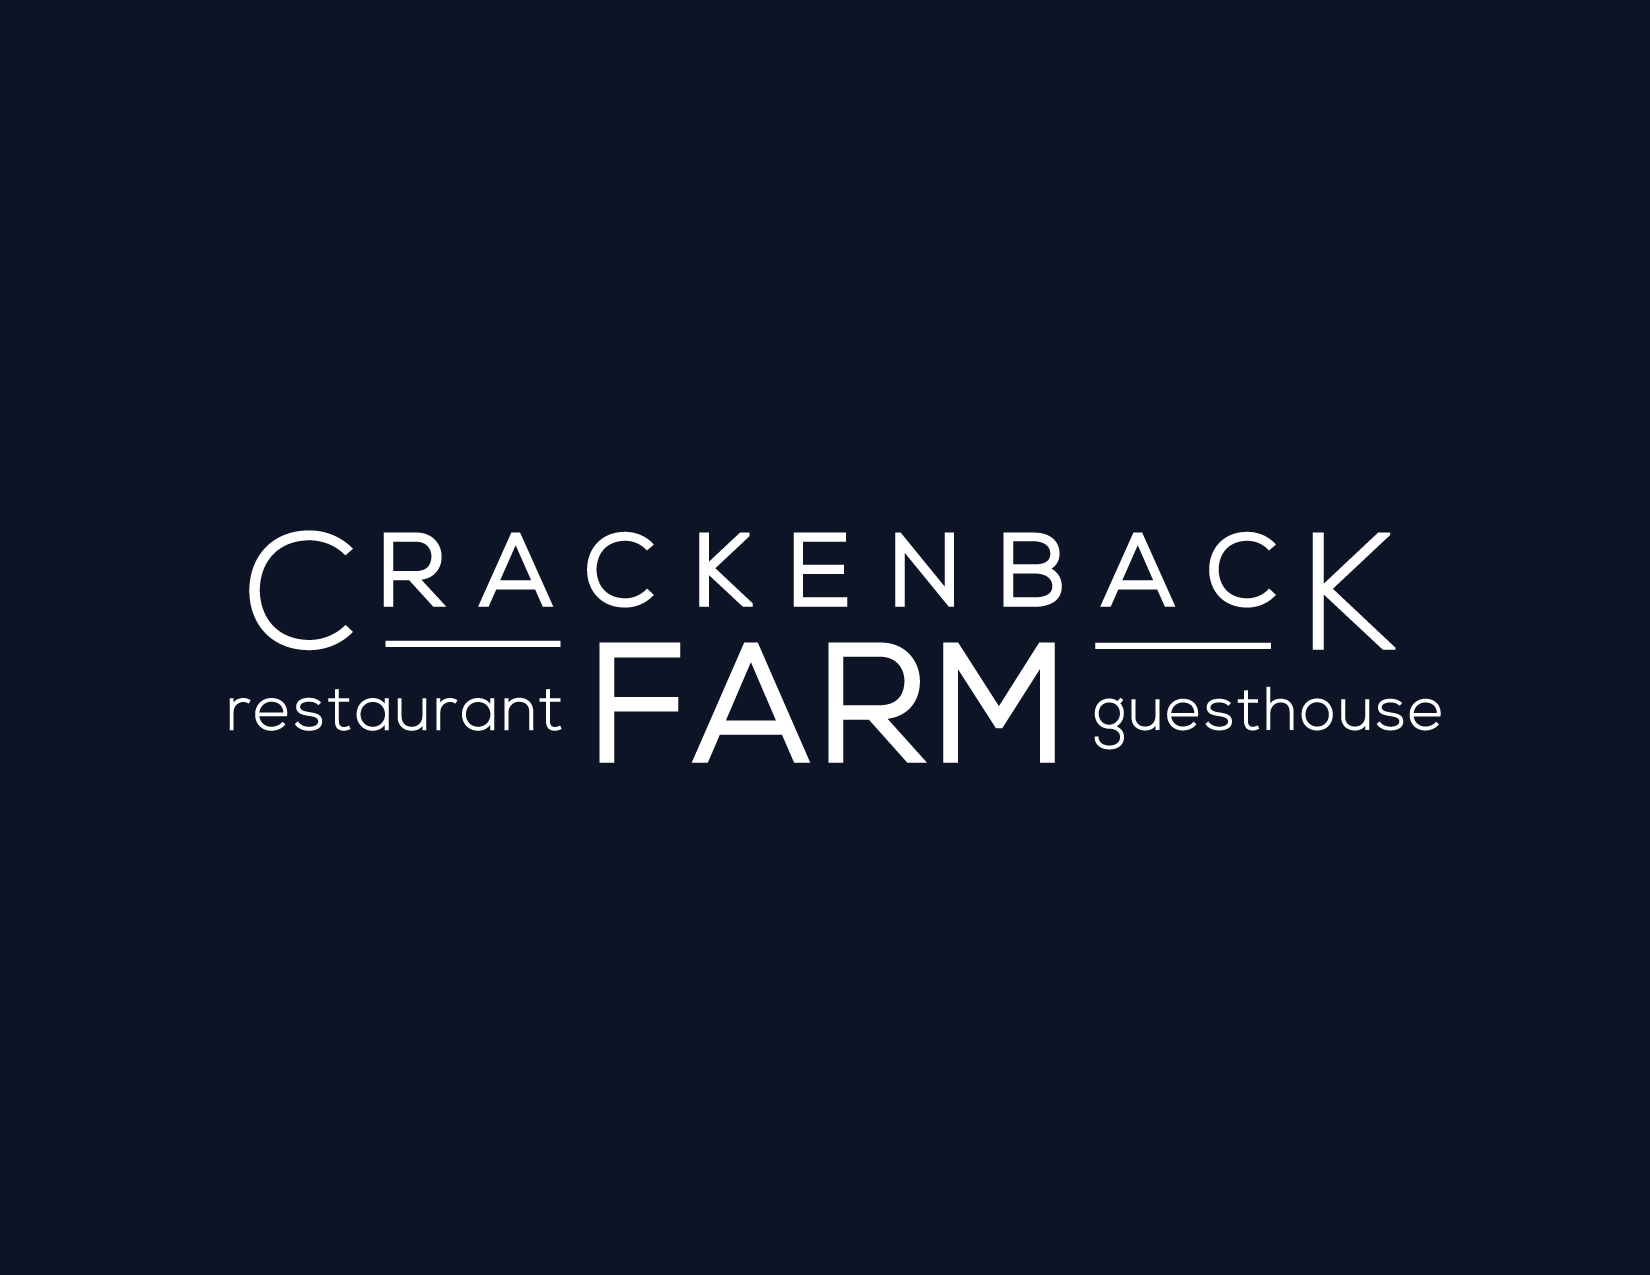 Crackenback Farm logo